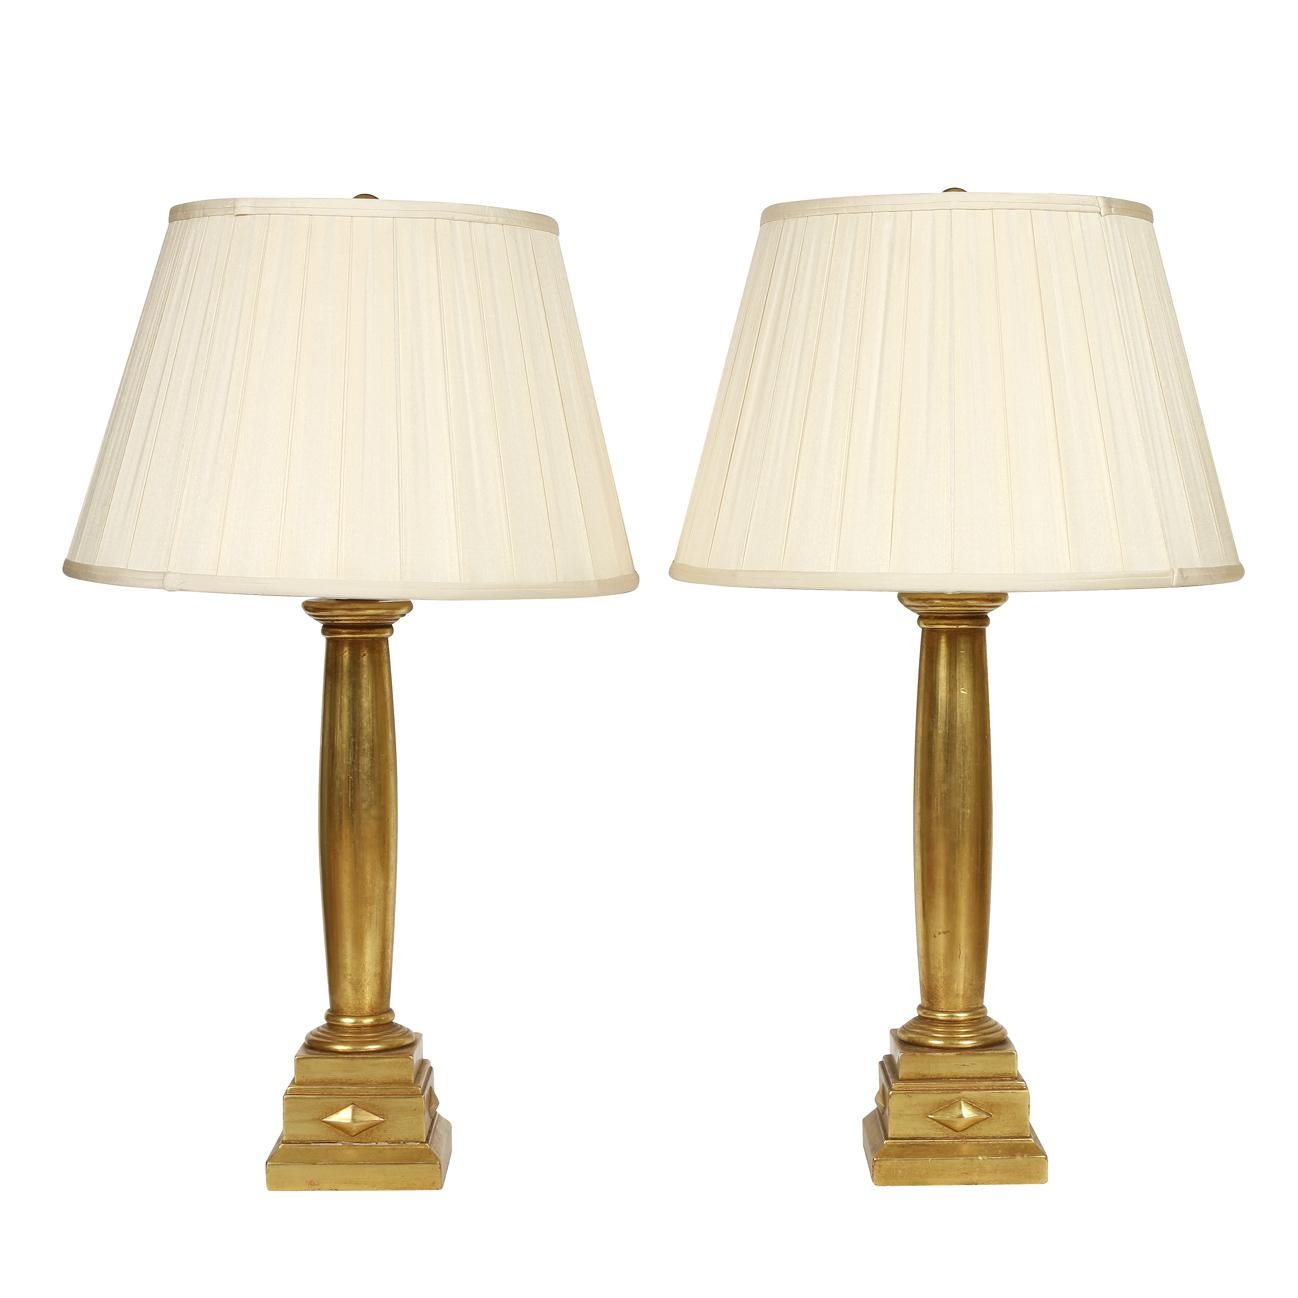 Neoclassical Revival Pair of Giltwood Column Form Lamps